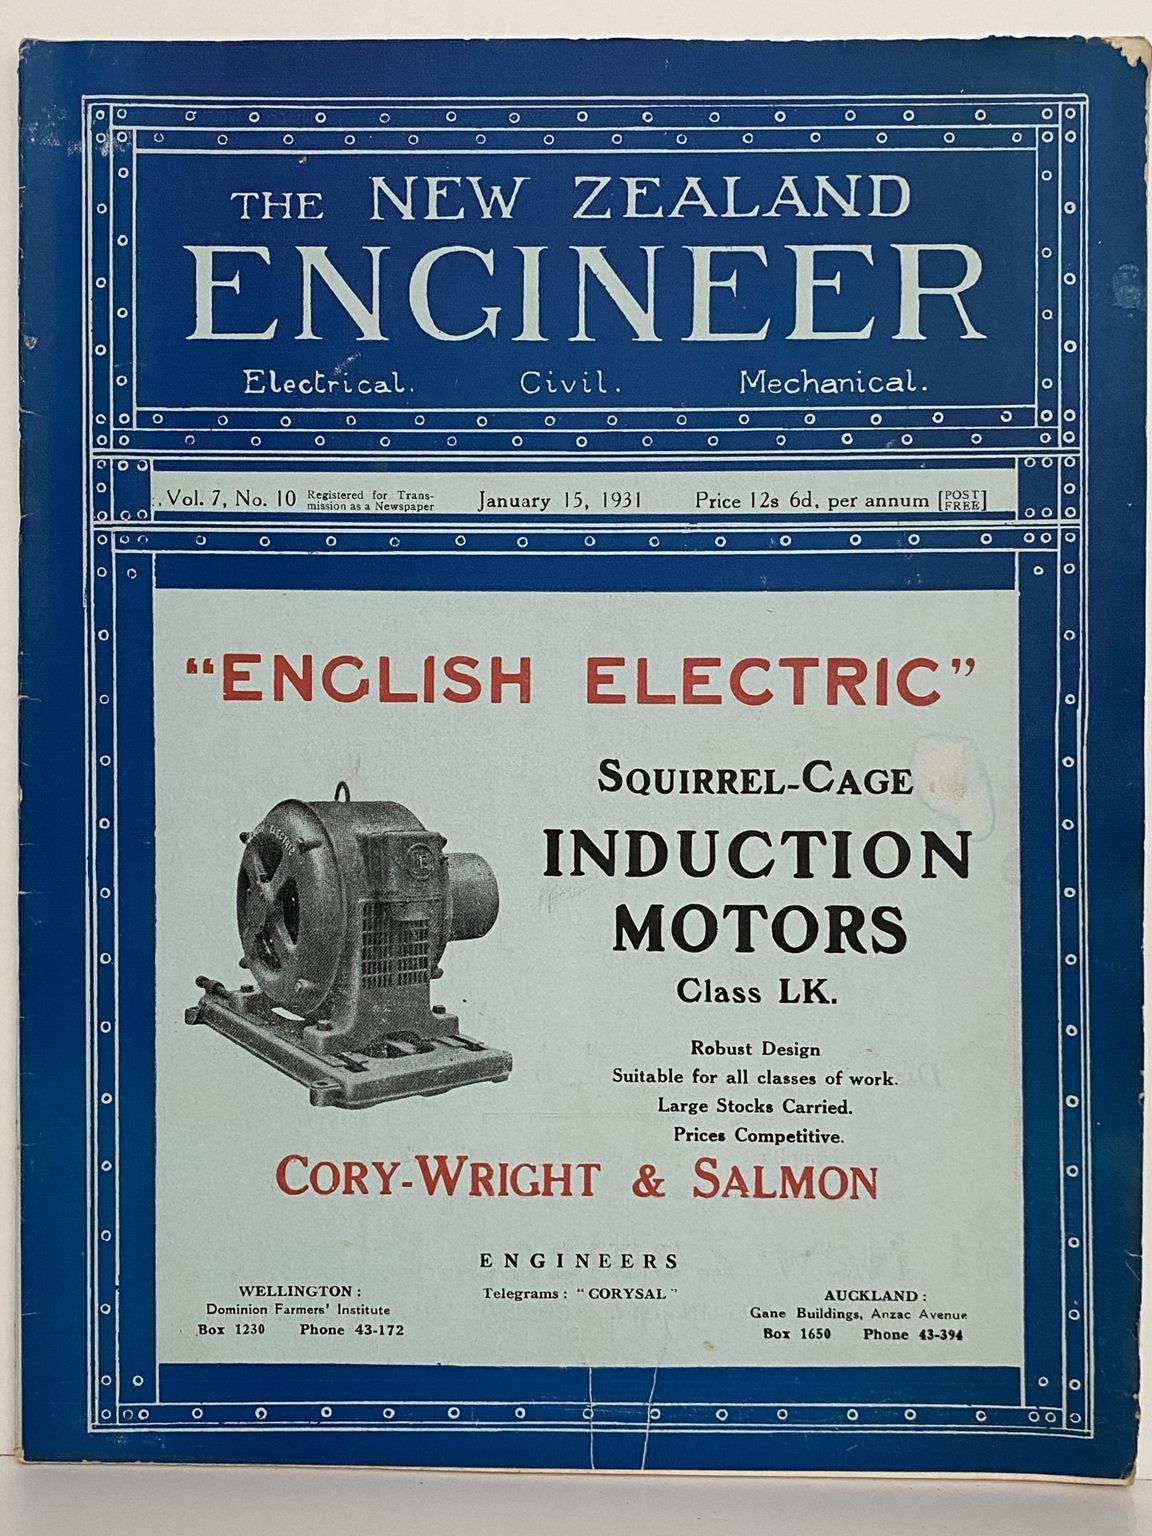 OLD MAGAZINE: The New Zealand Engineer Vol. 7, No. 10 - 15 January 1931